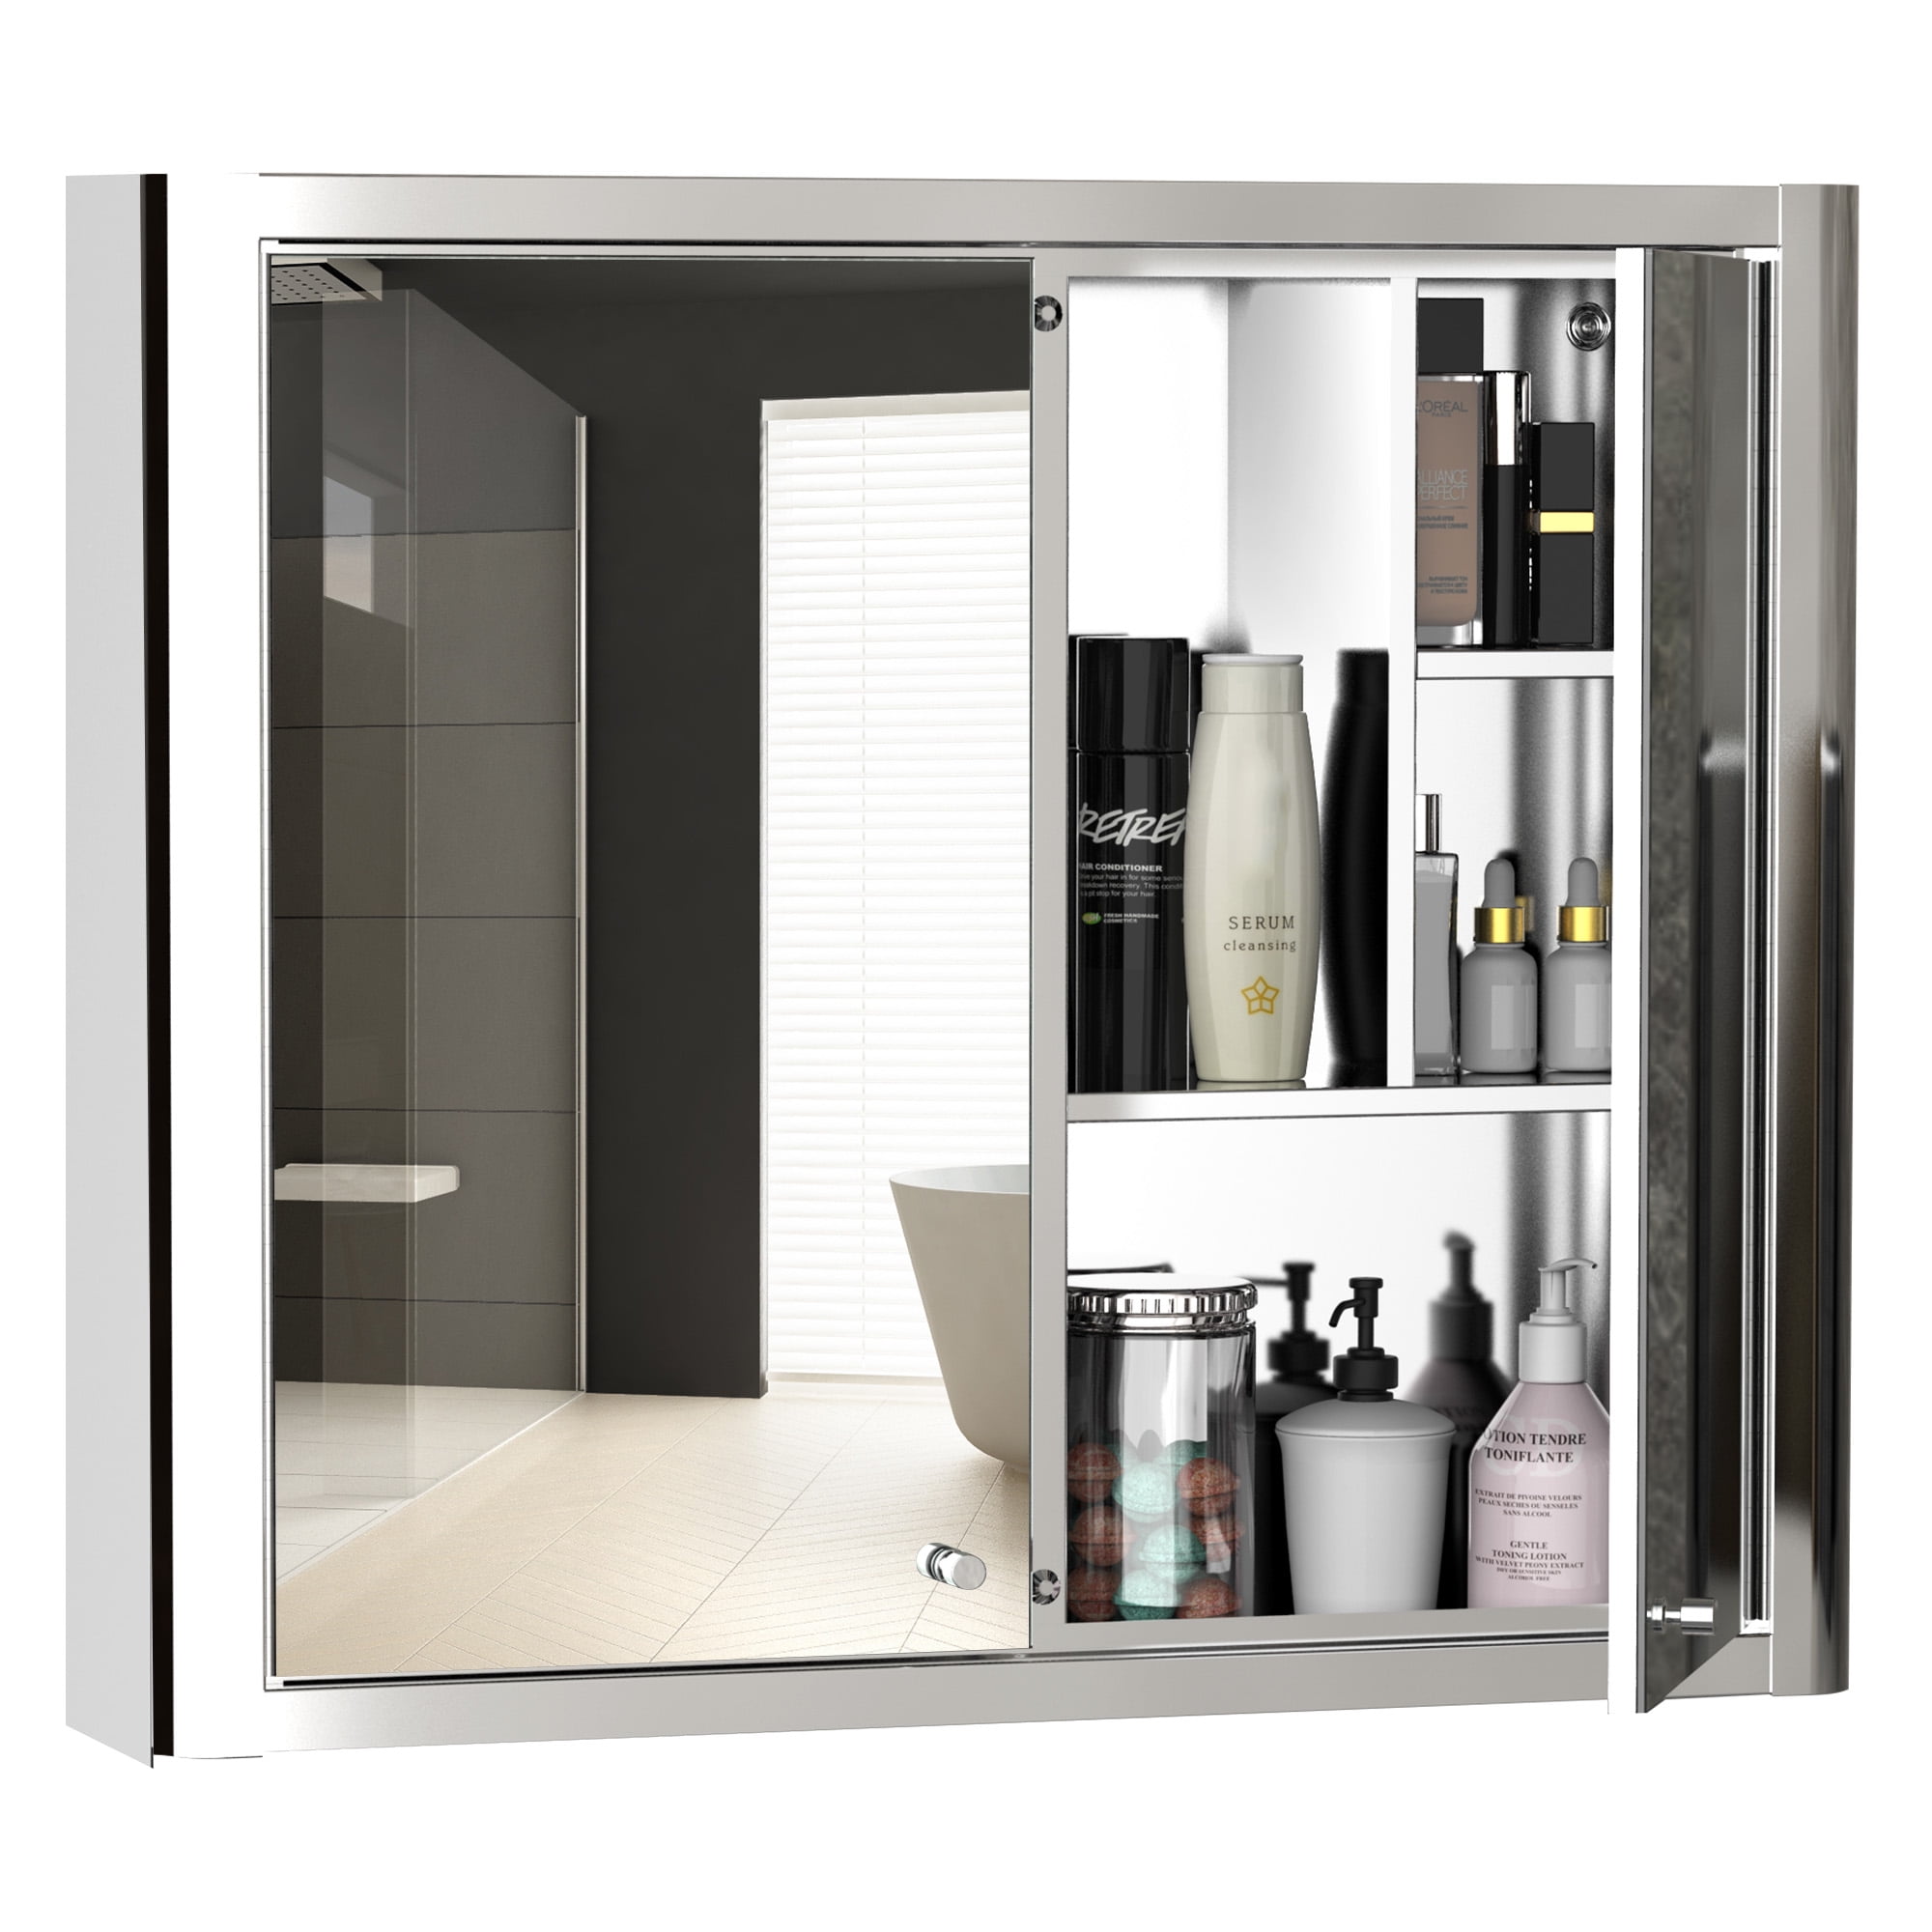 Wall Mounted Bathroom Mirror Cabinet, Bathroom Wall Mount Medicine Cabinet Storage With Mirror Doors Shelf